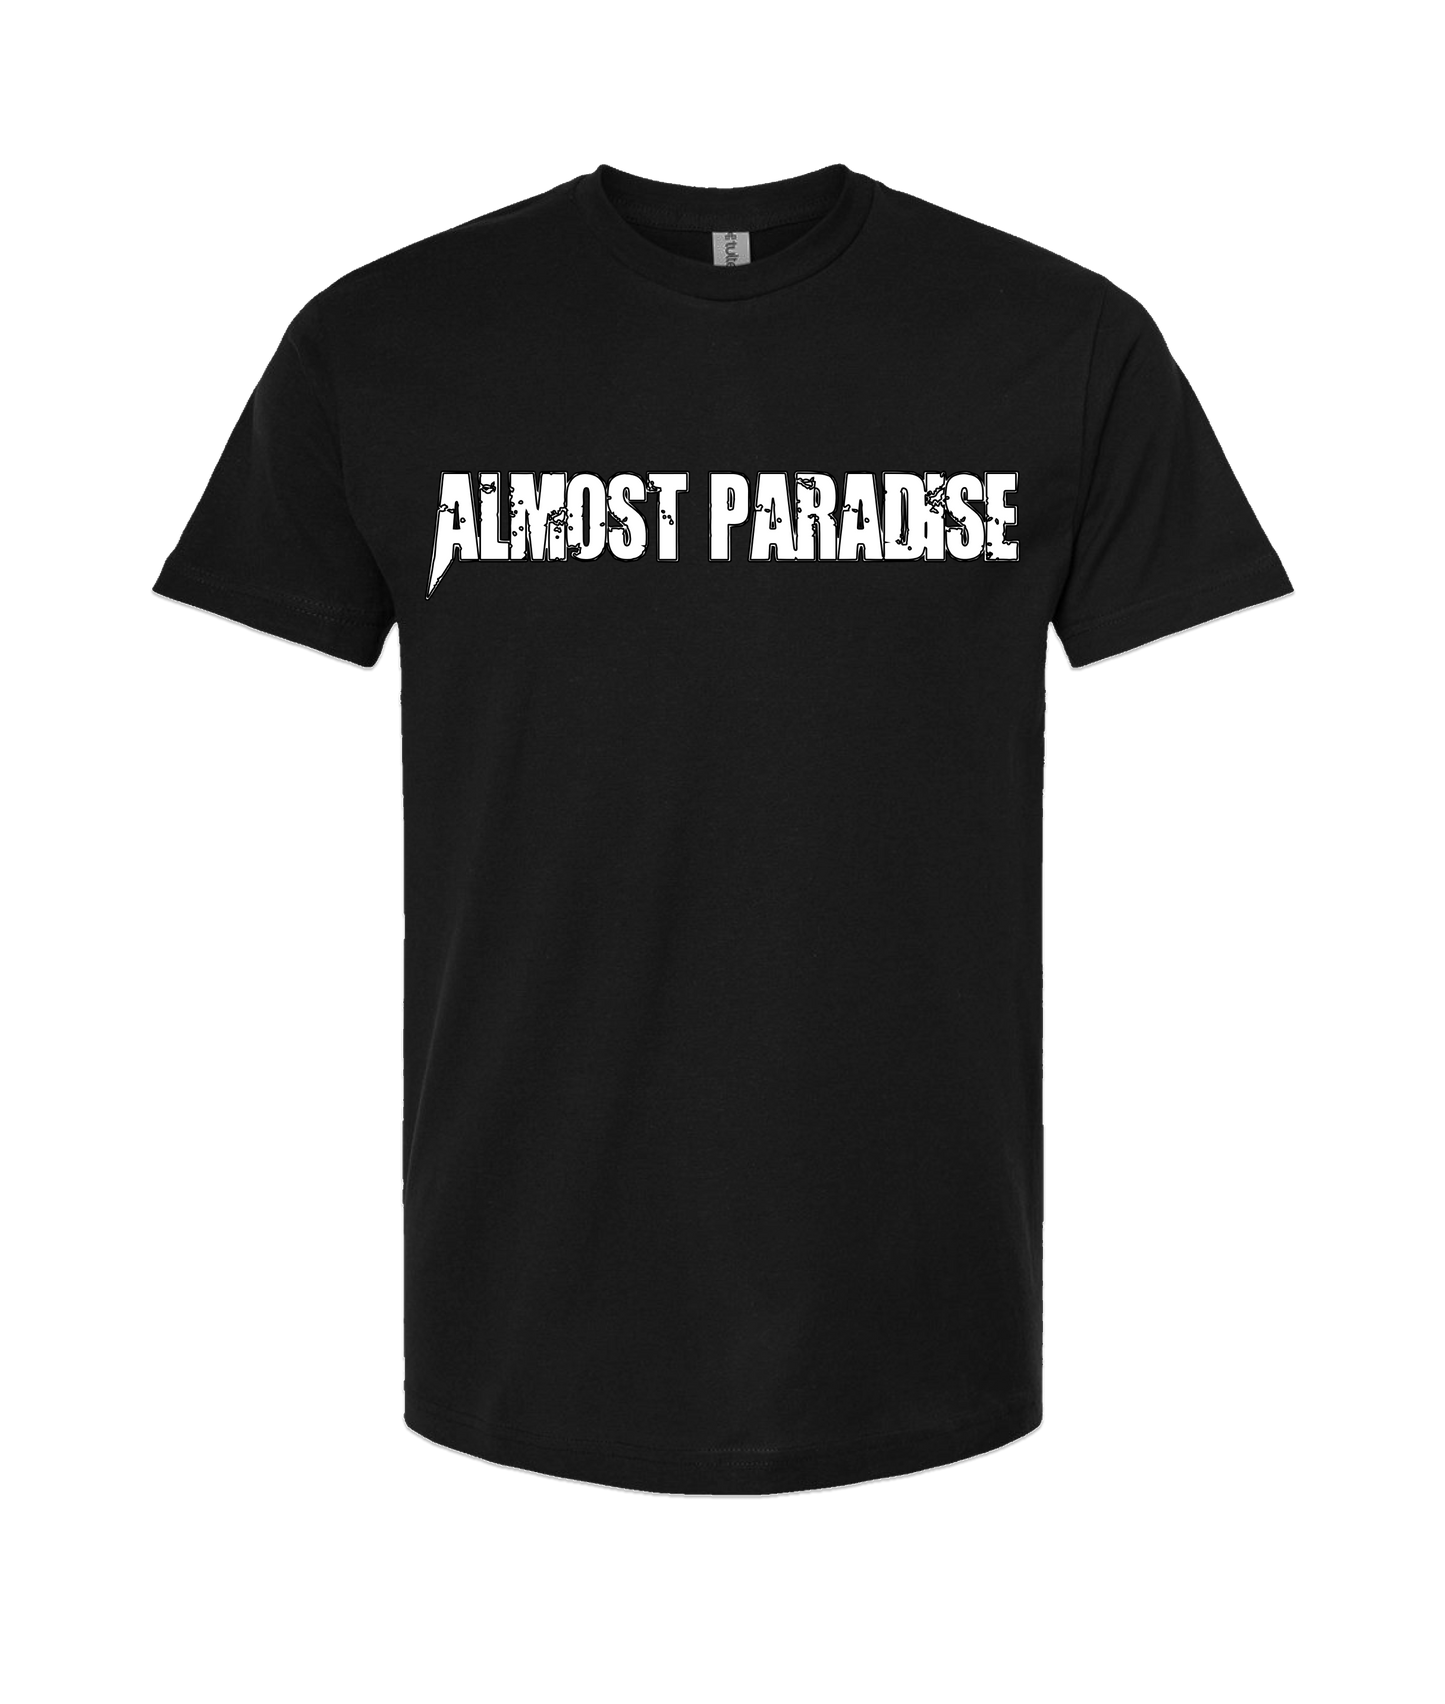 Almost Paradise - Trip to Paradise Season 1 - Black T-Shirt